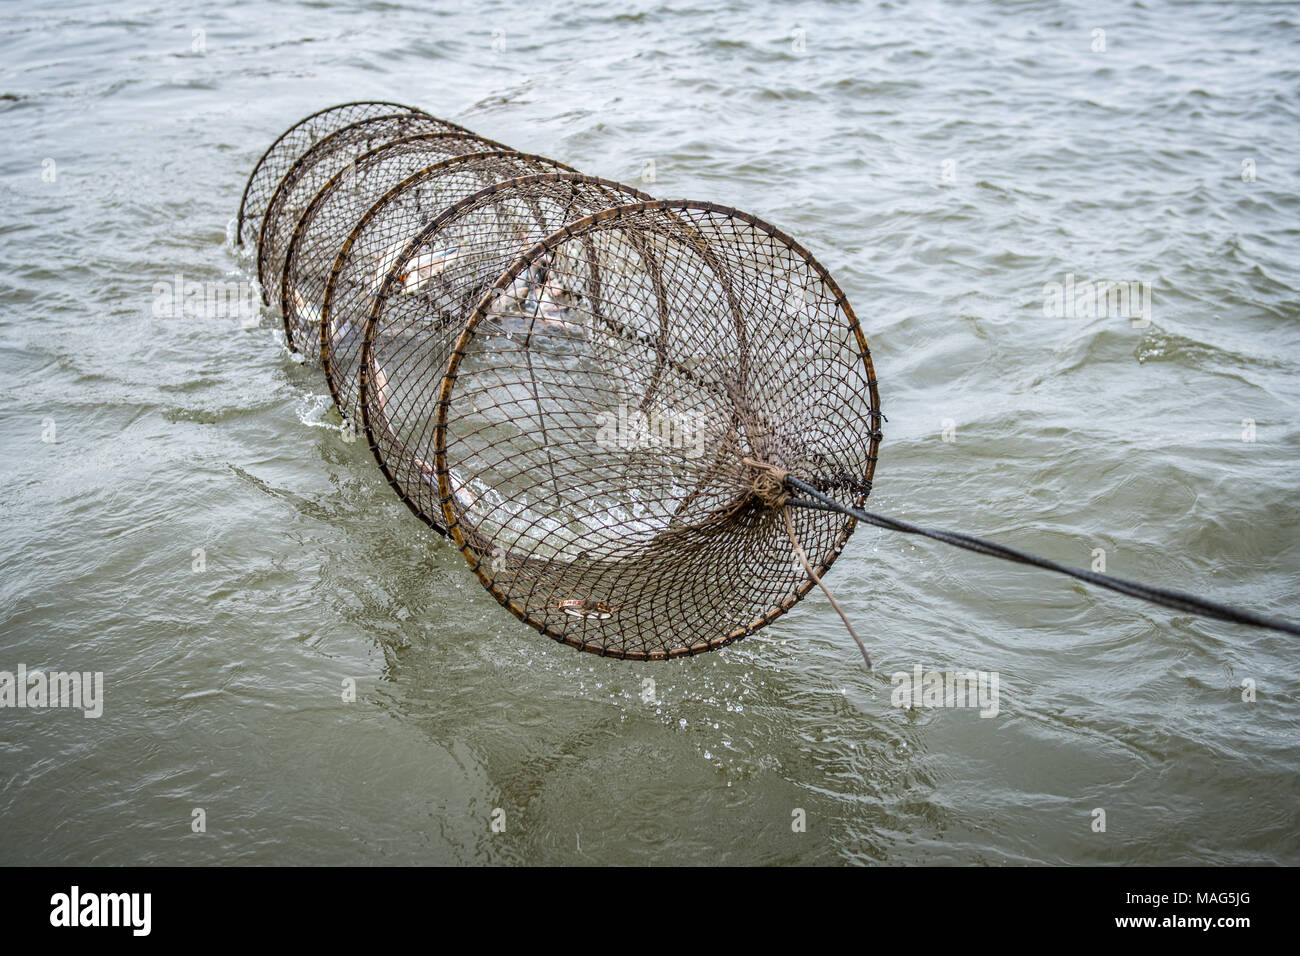 Potomac river catfish hi-res stock photography and images - Alamy